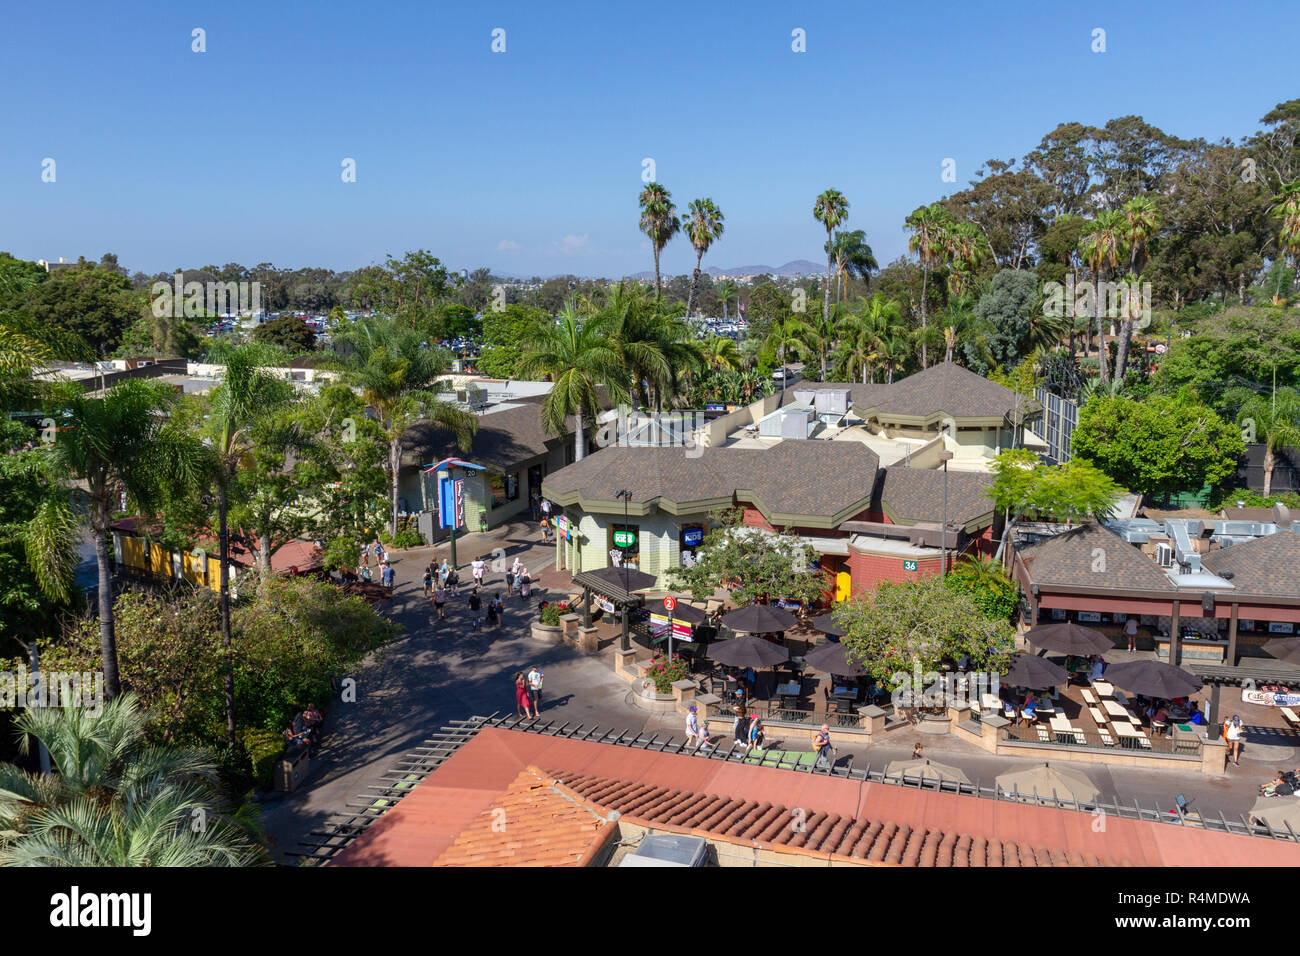 View from Skyfari aerial tram/cable car, San Diego Zoo, Balboa Park, California, United States. Stock Photo